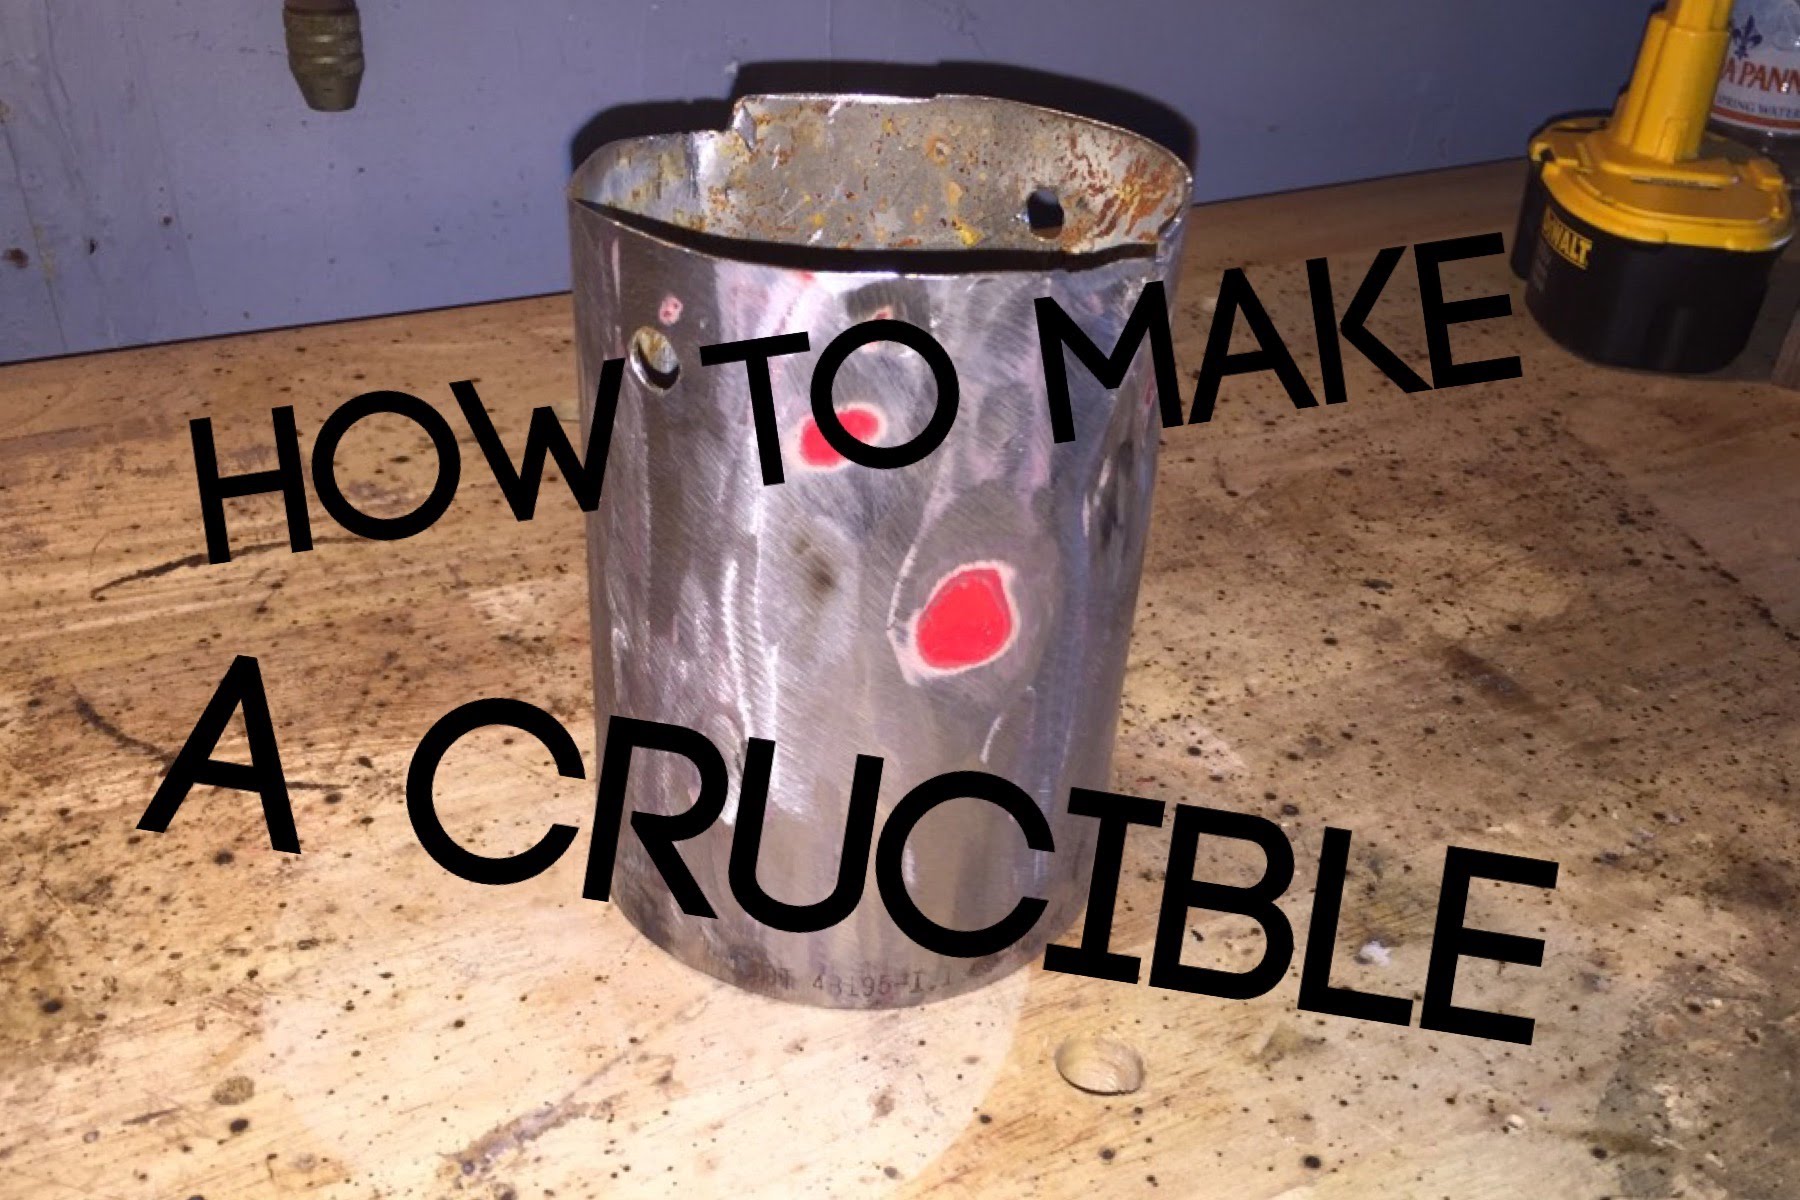 Crucible on fire photo